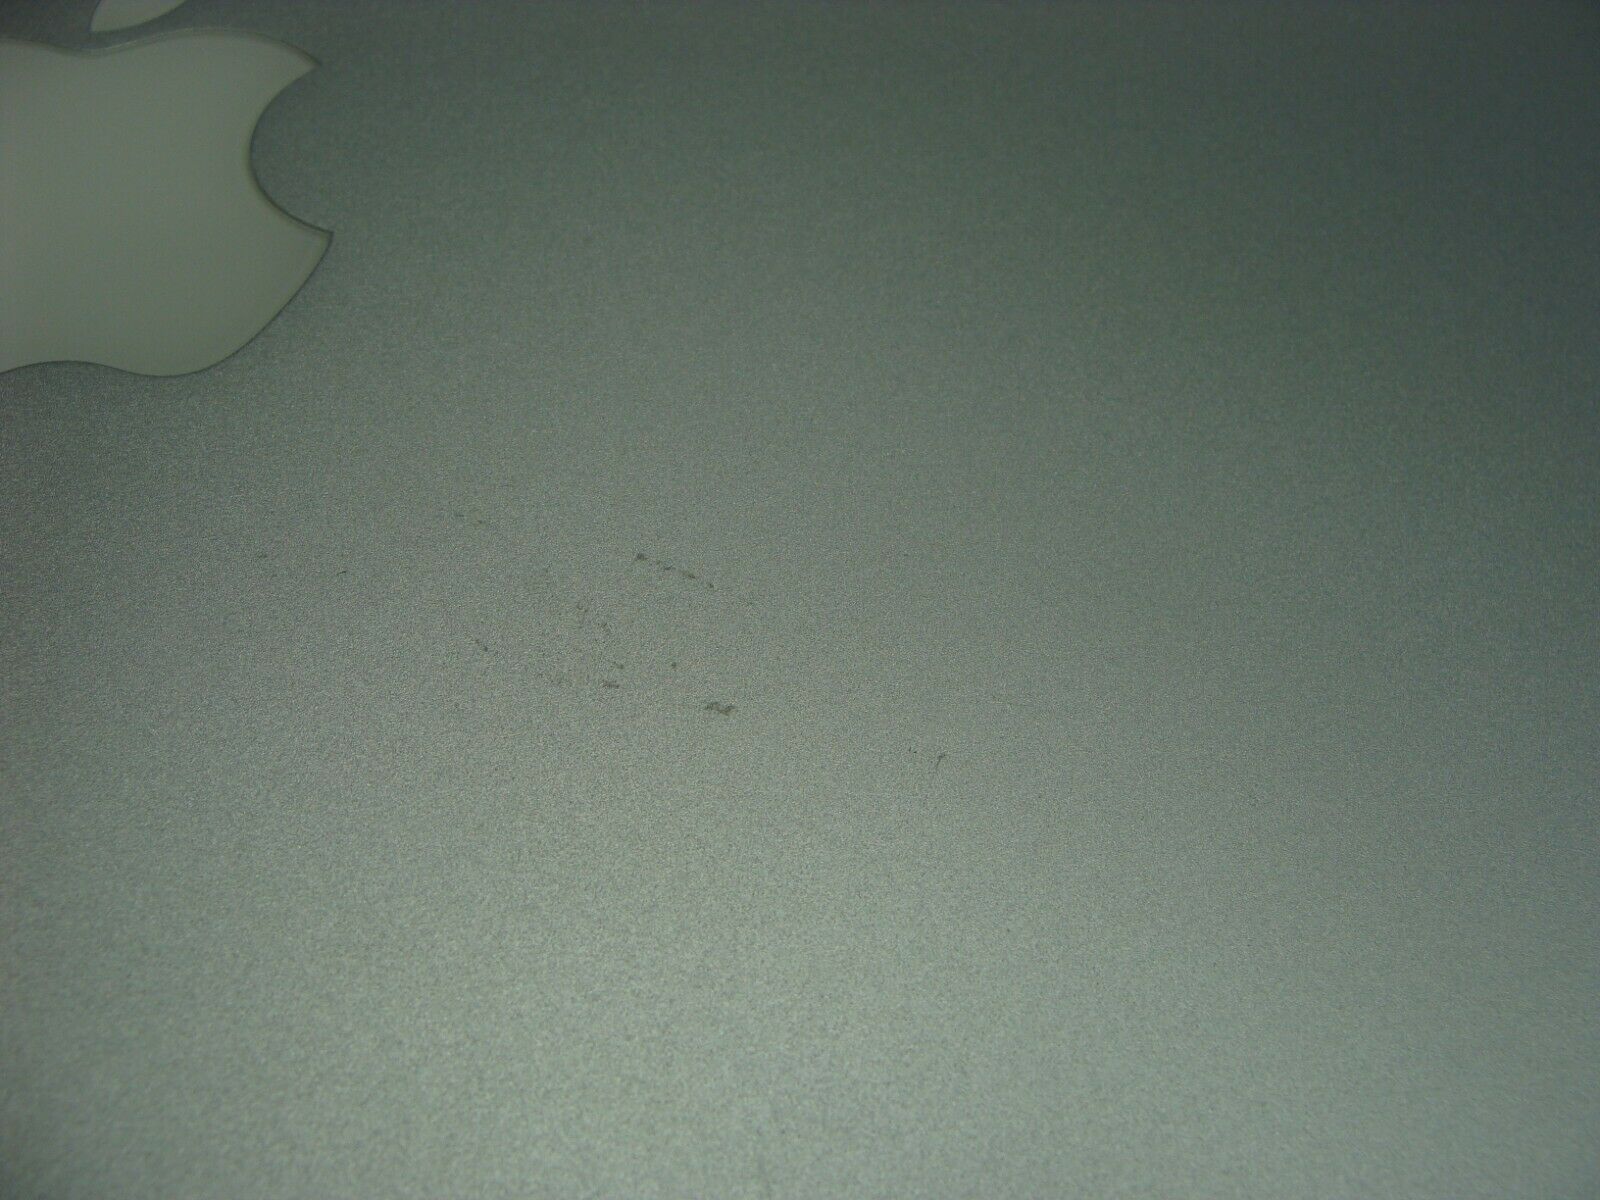 MacBook Pro A1278 MD313LL/A Late 2011 13